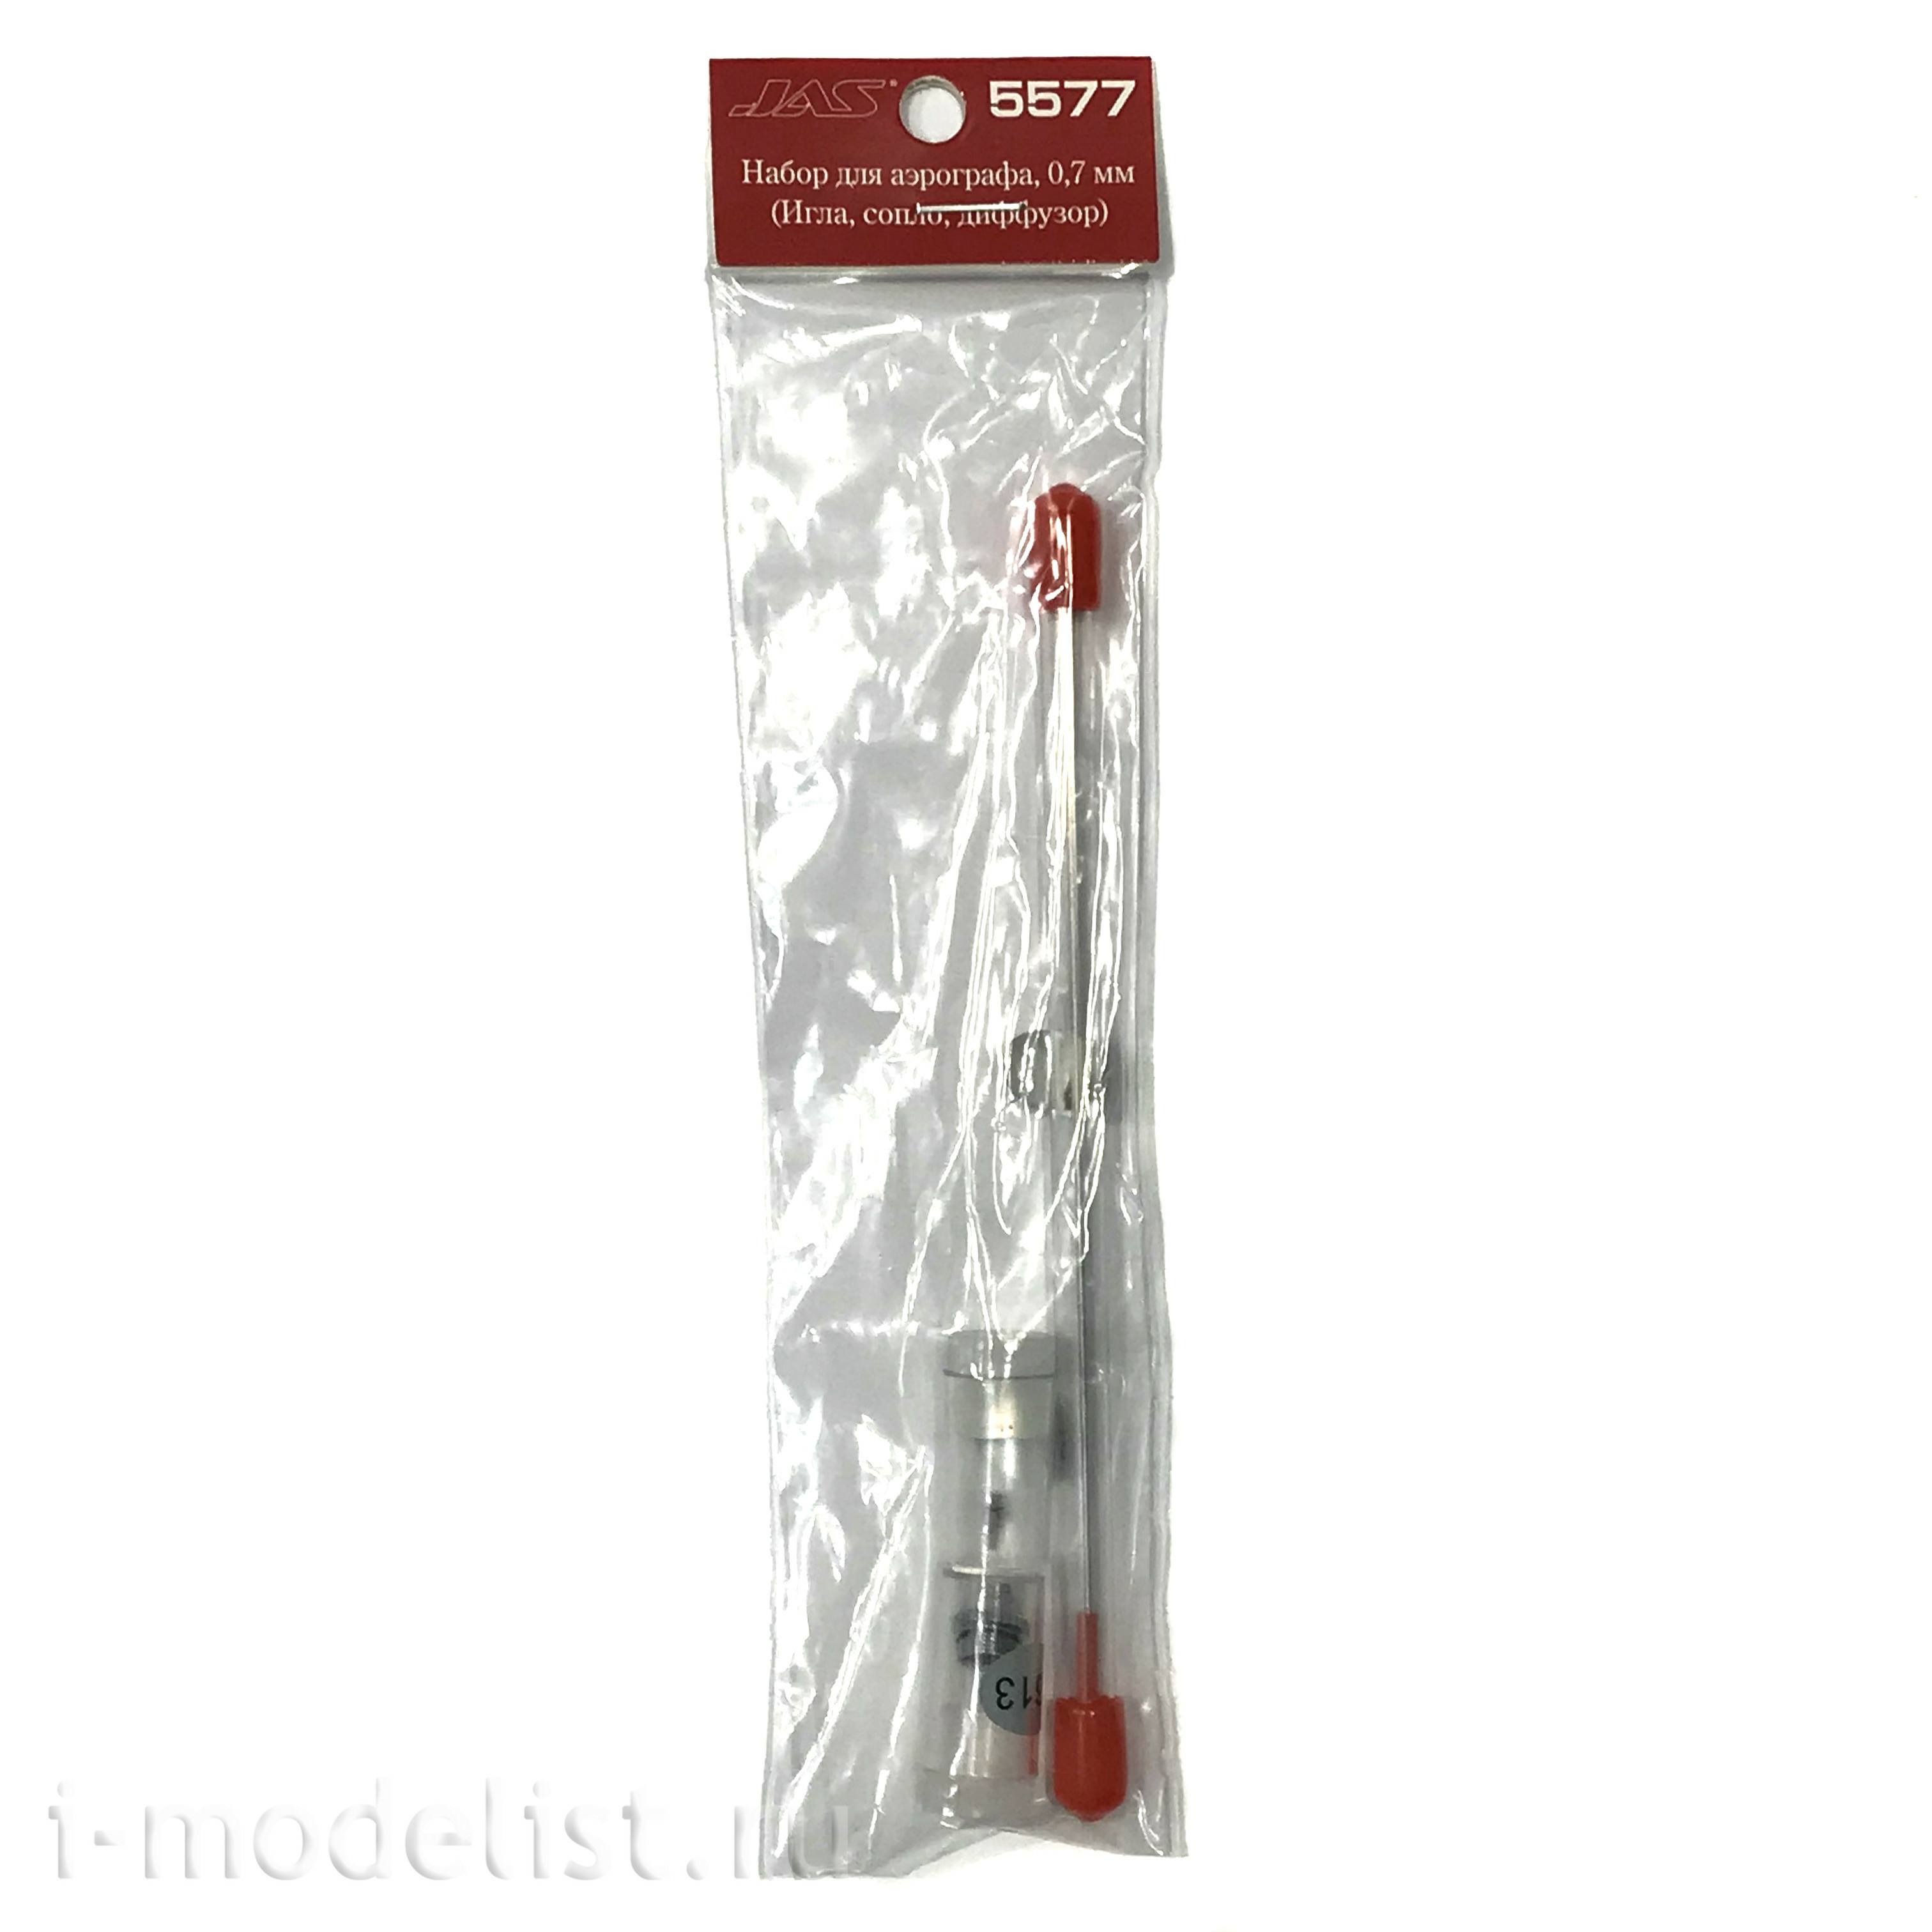 5577 JAS Airbrush Kit 0.7mm (Needle, Nozzle, Diffuser)